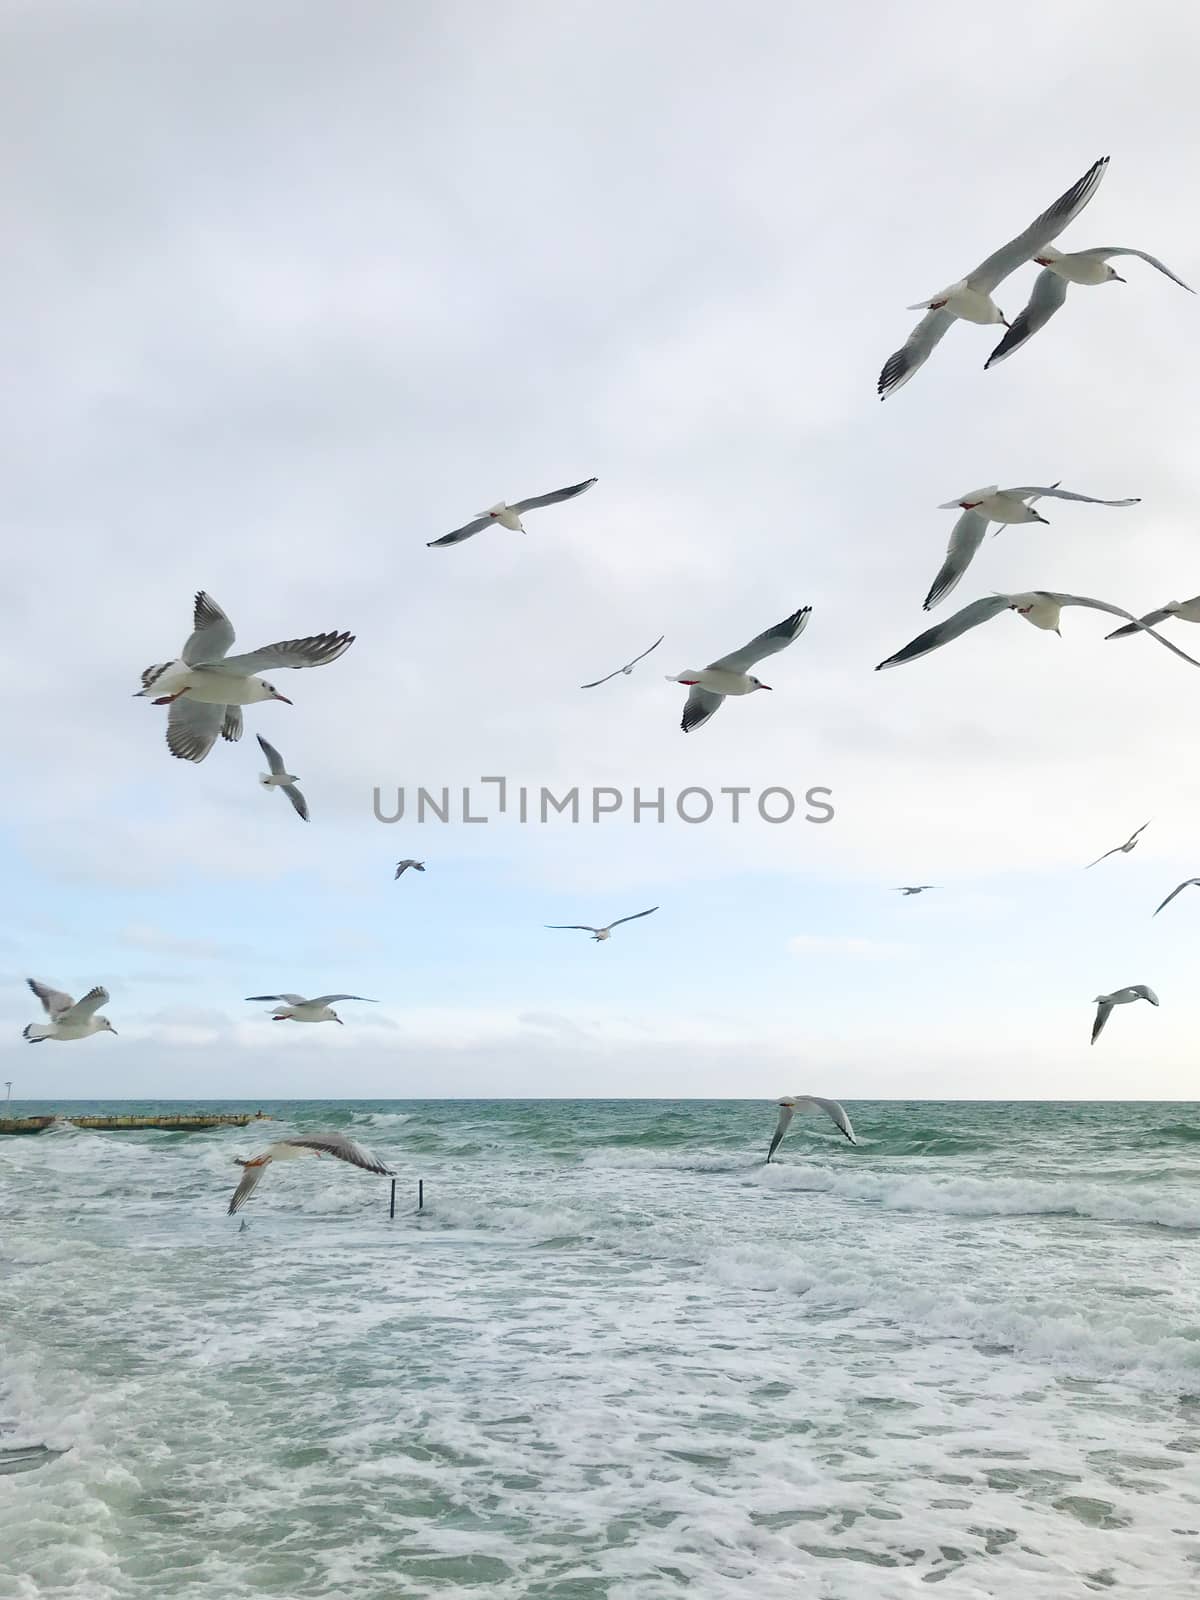 Seagulls Flying Over Sea